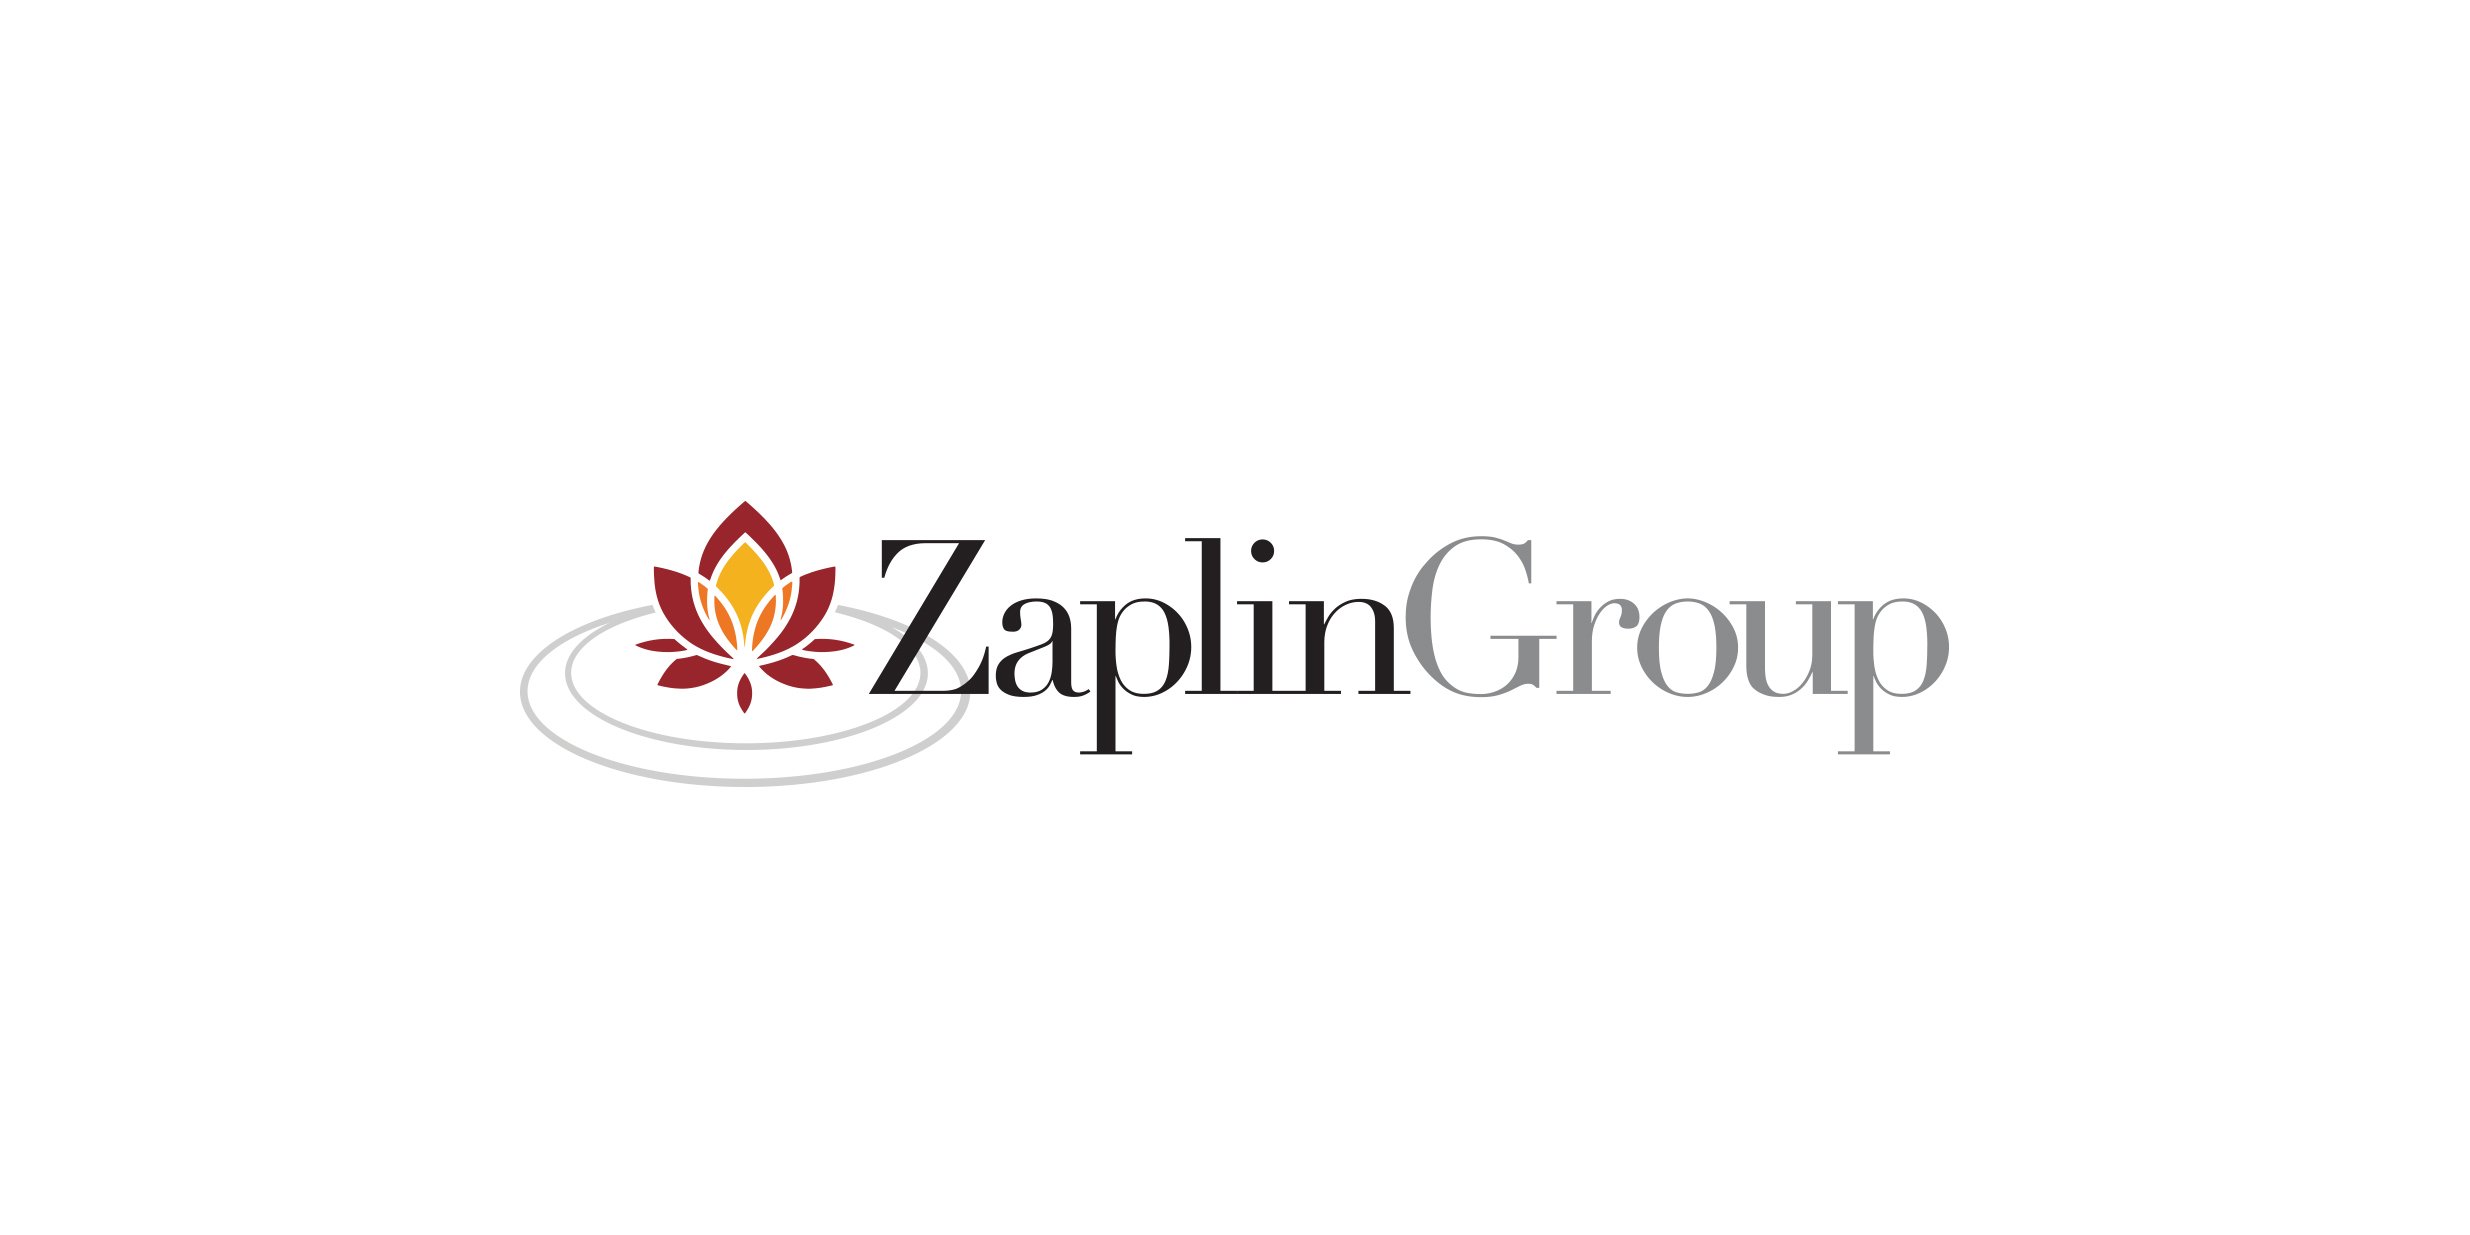 The Zaplin Group, corporate mark